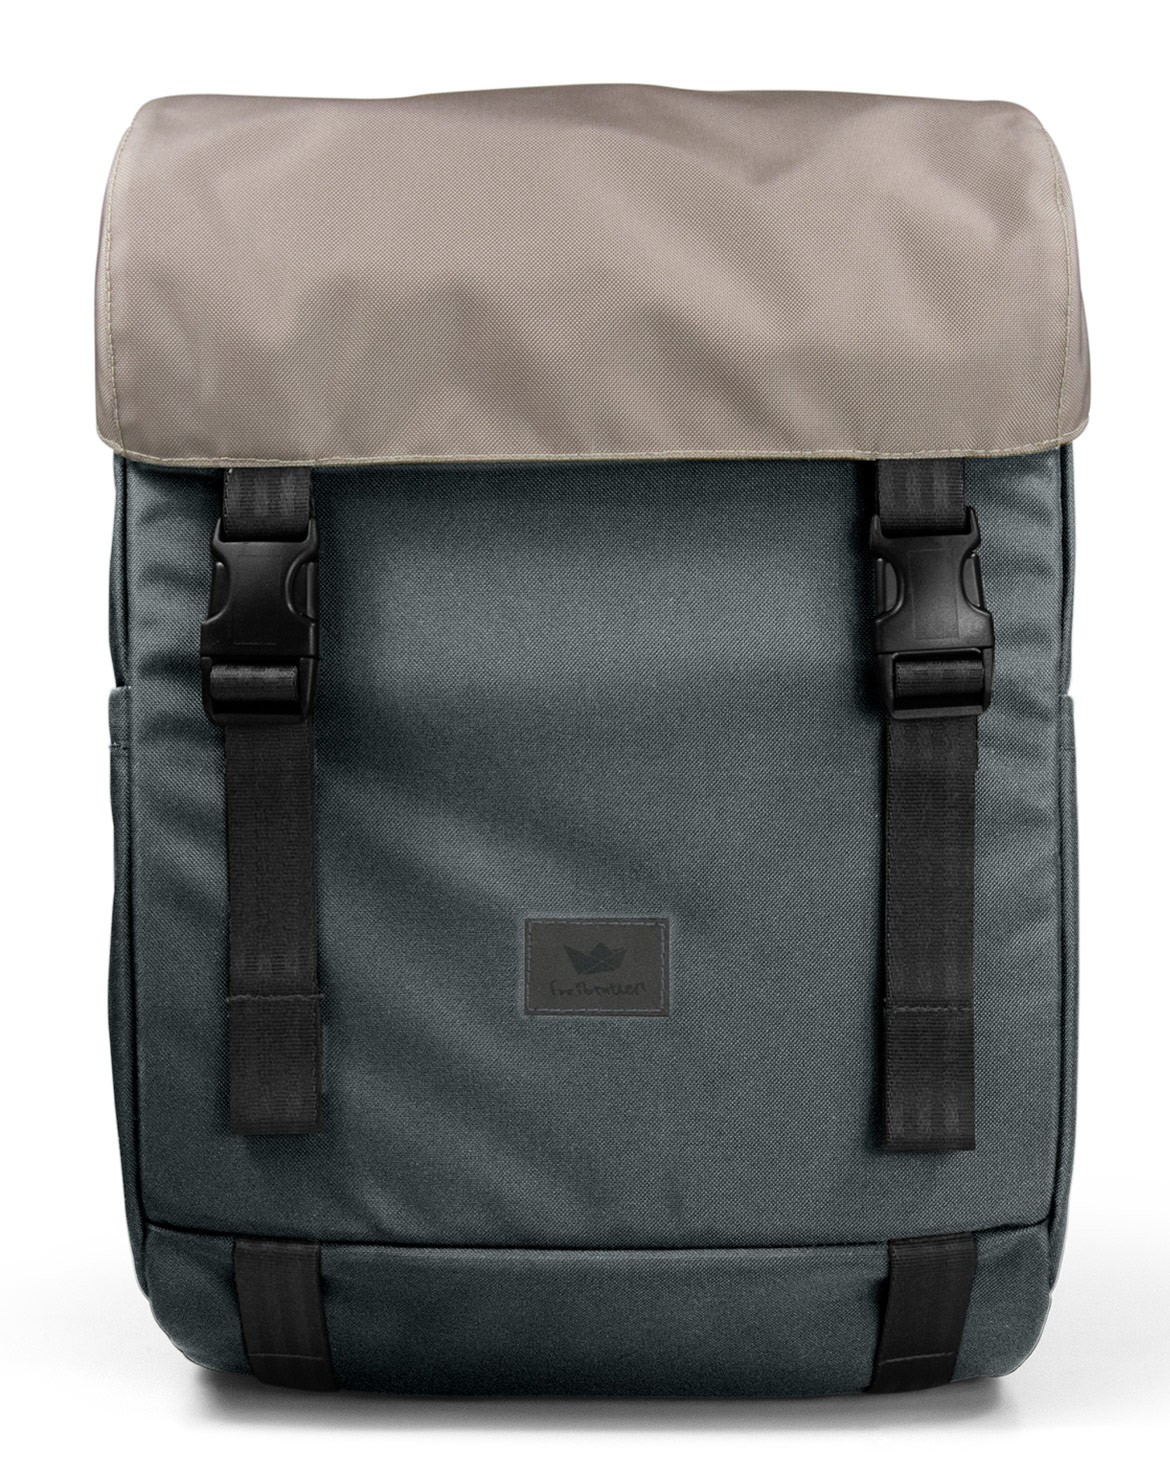 Ante Backpack